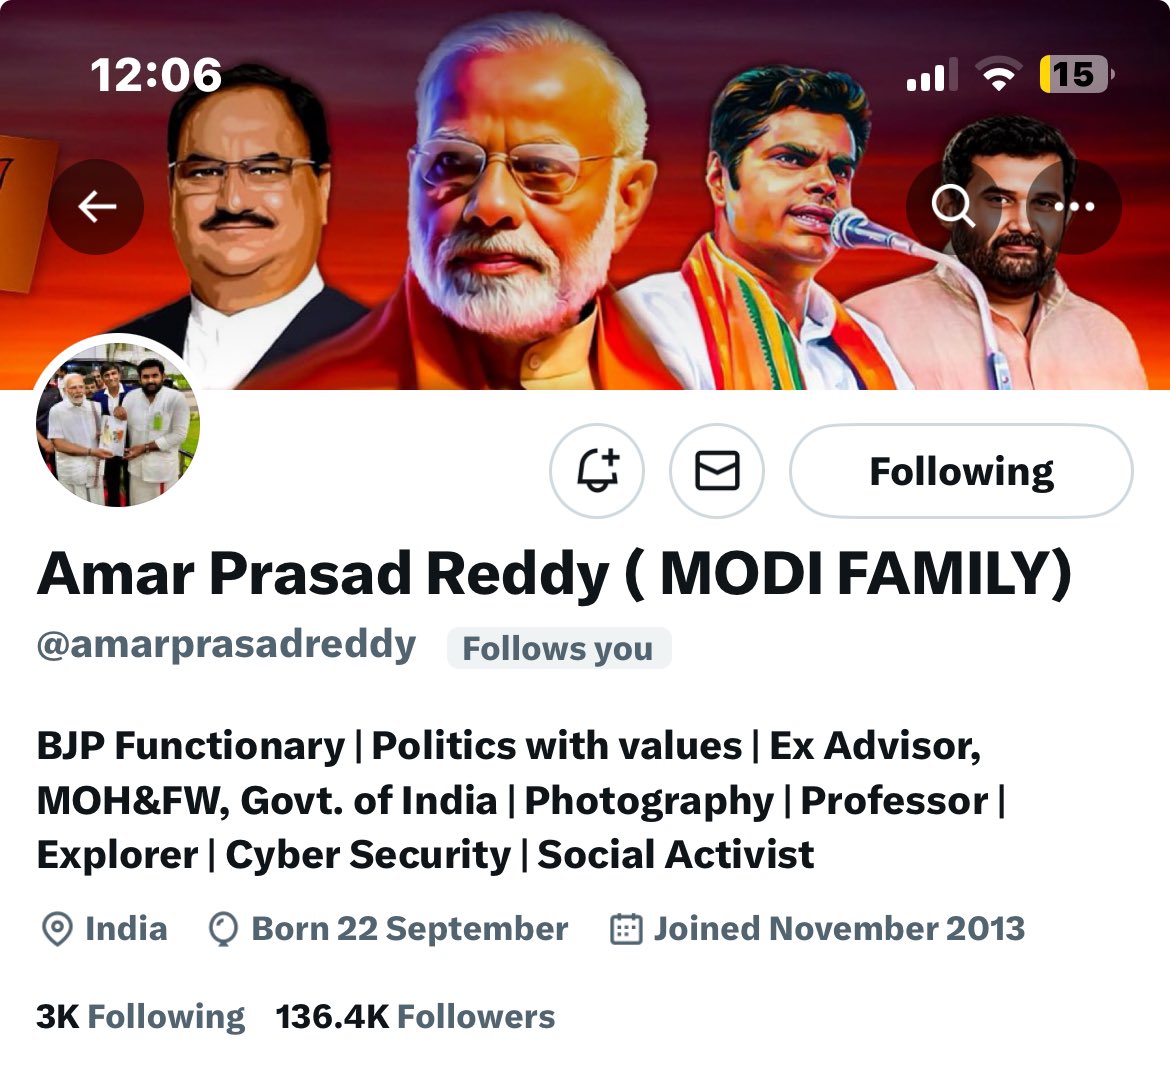 I say this Tamilnadu is following me on twitter✊🏻 Thank you @amarprasadreddy